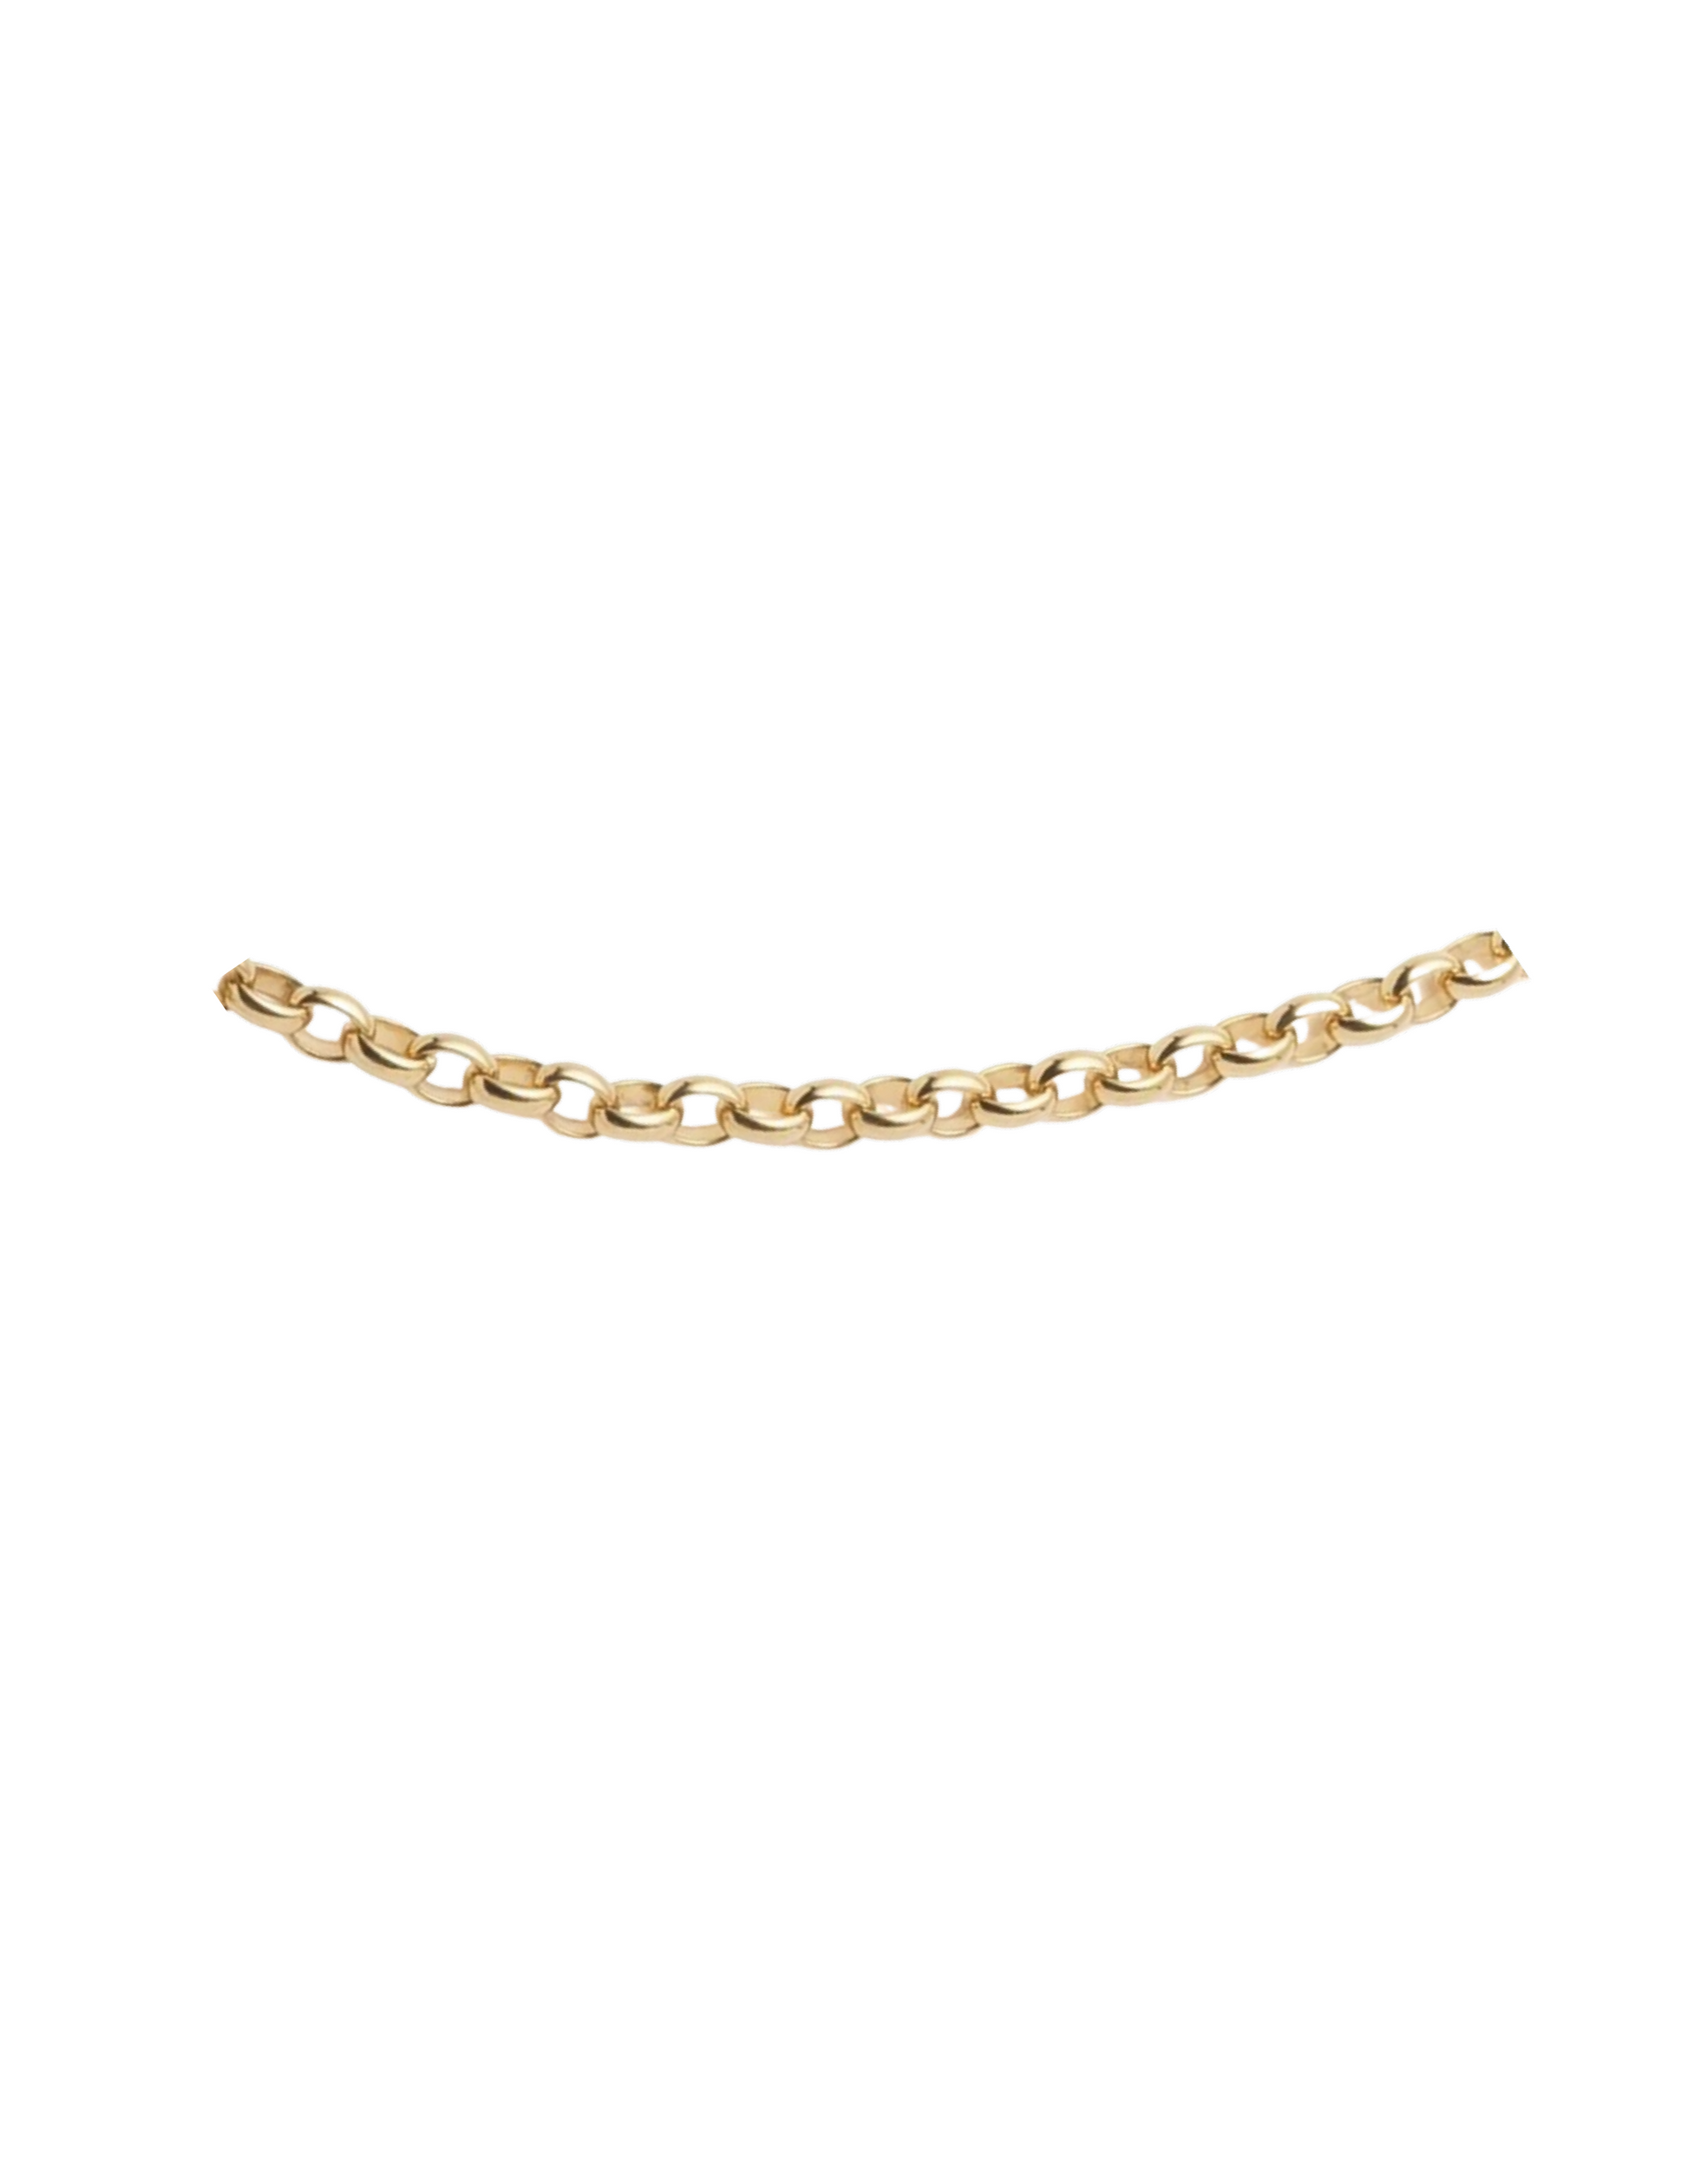 Rolo Belcher Chain | 14k Gold | 20 inch - Also, Freedom